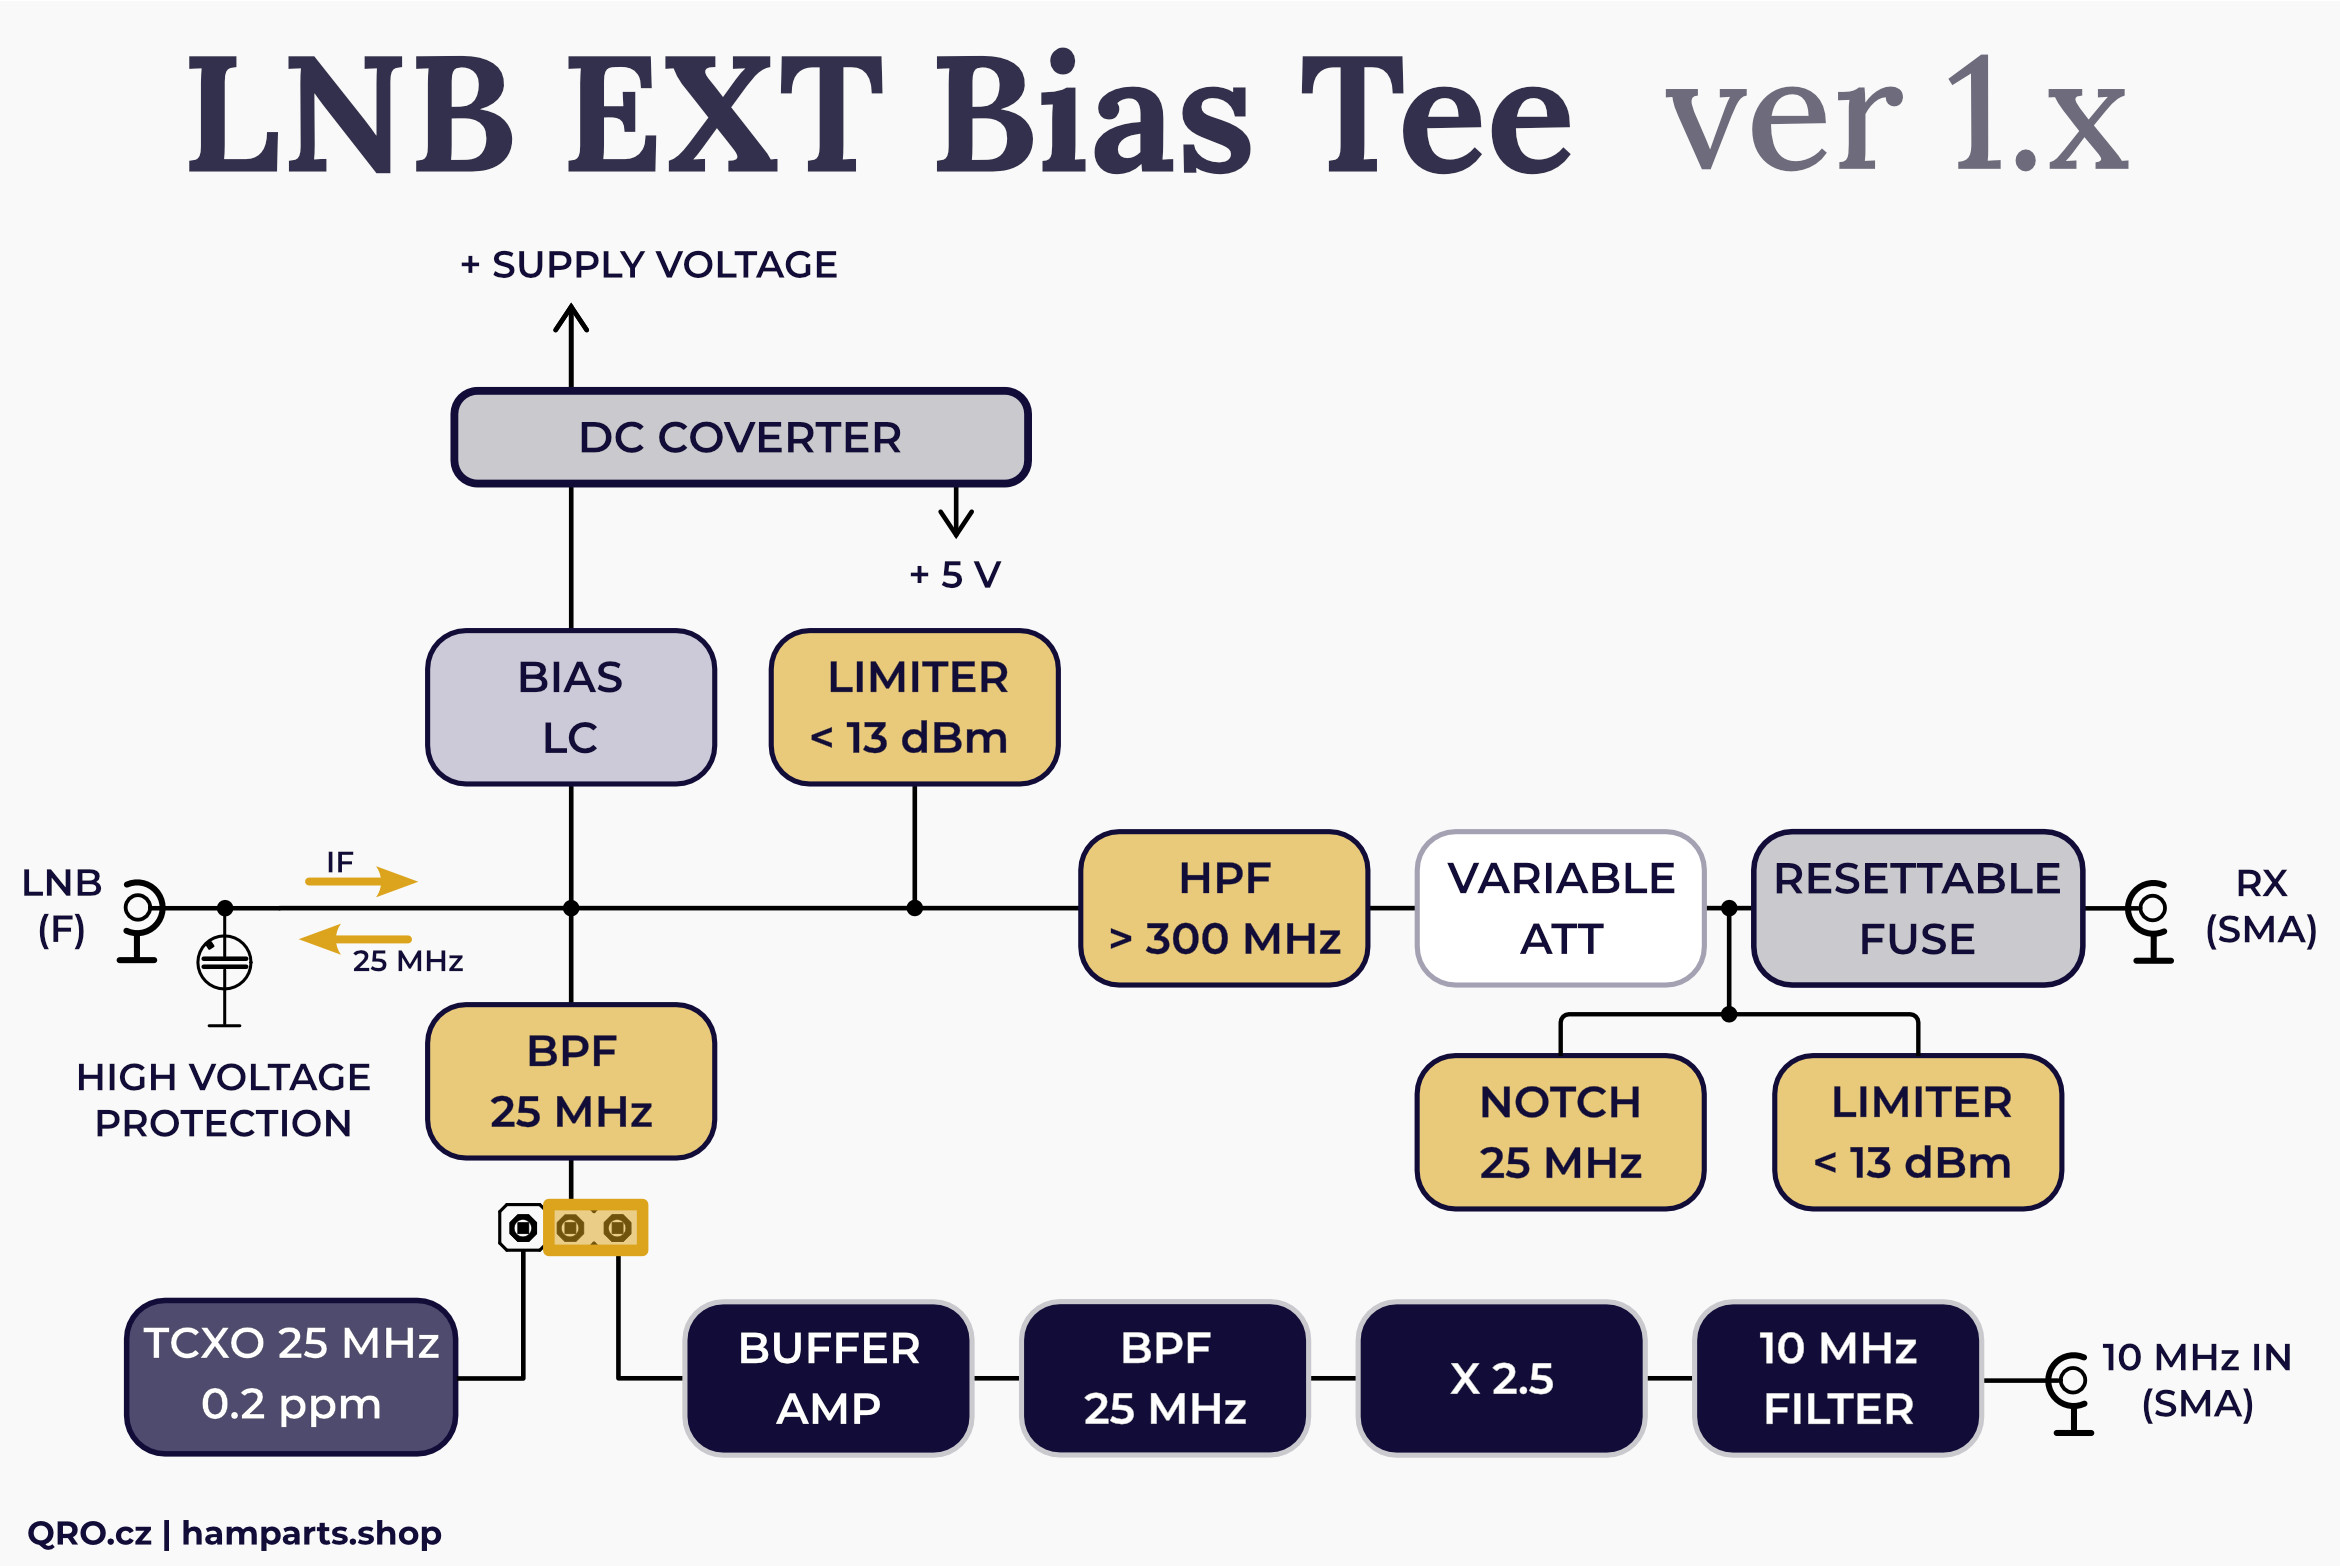 lnb bias tee box block diagram by qro.cz hamparts.shop